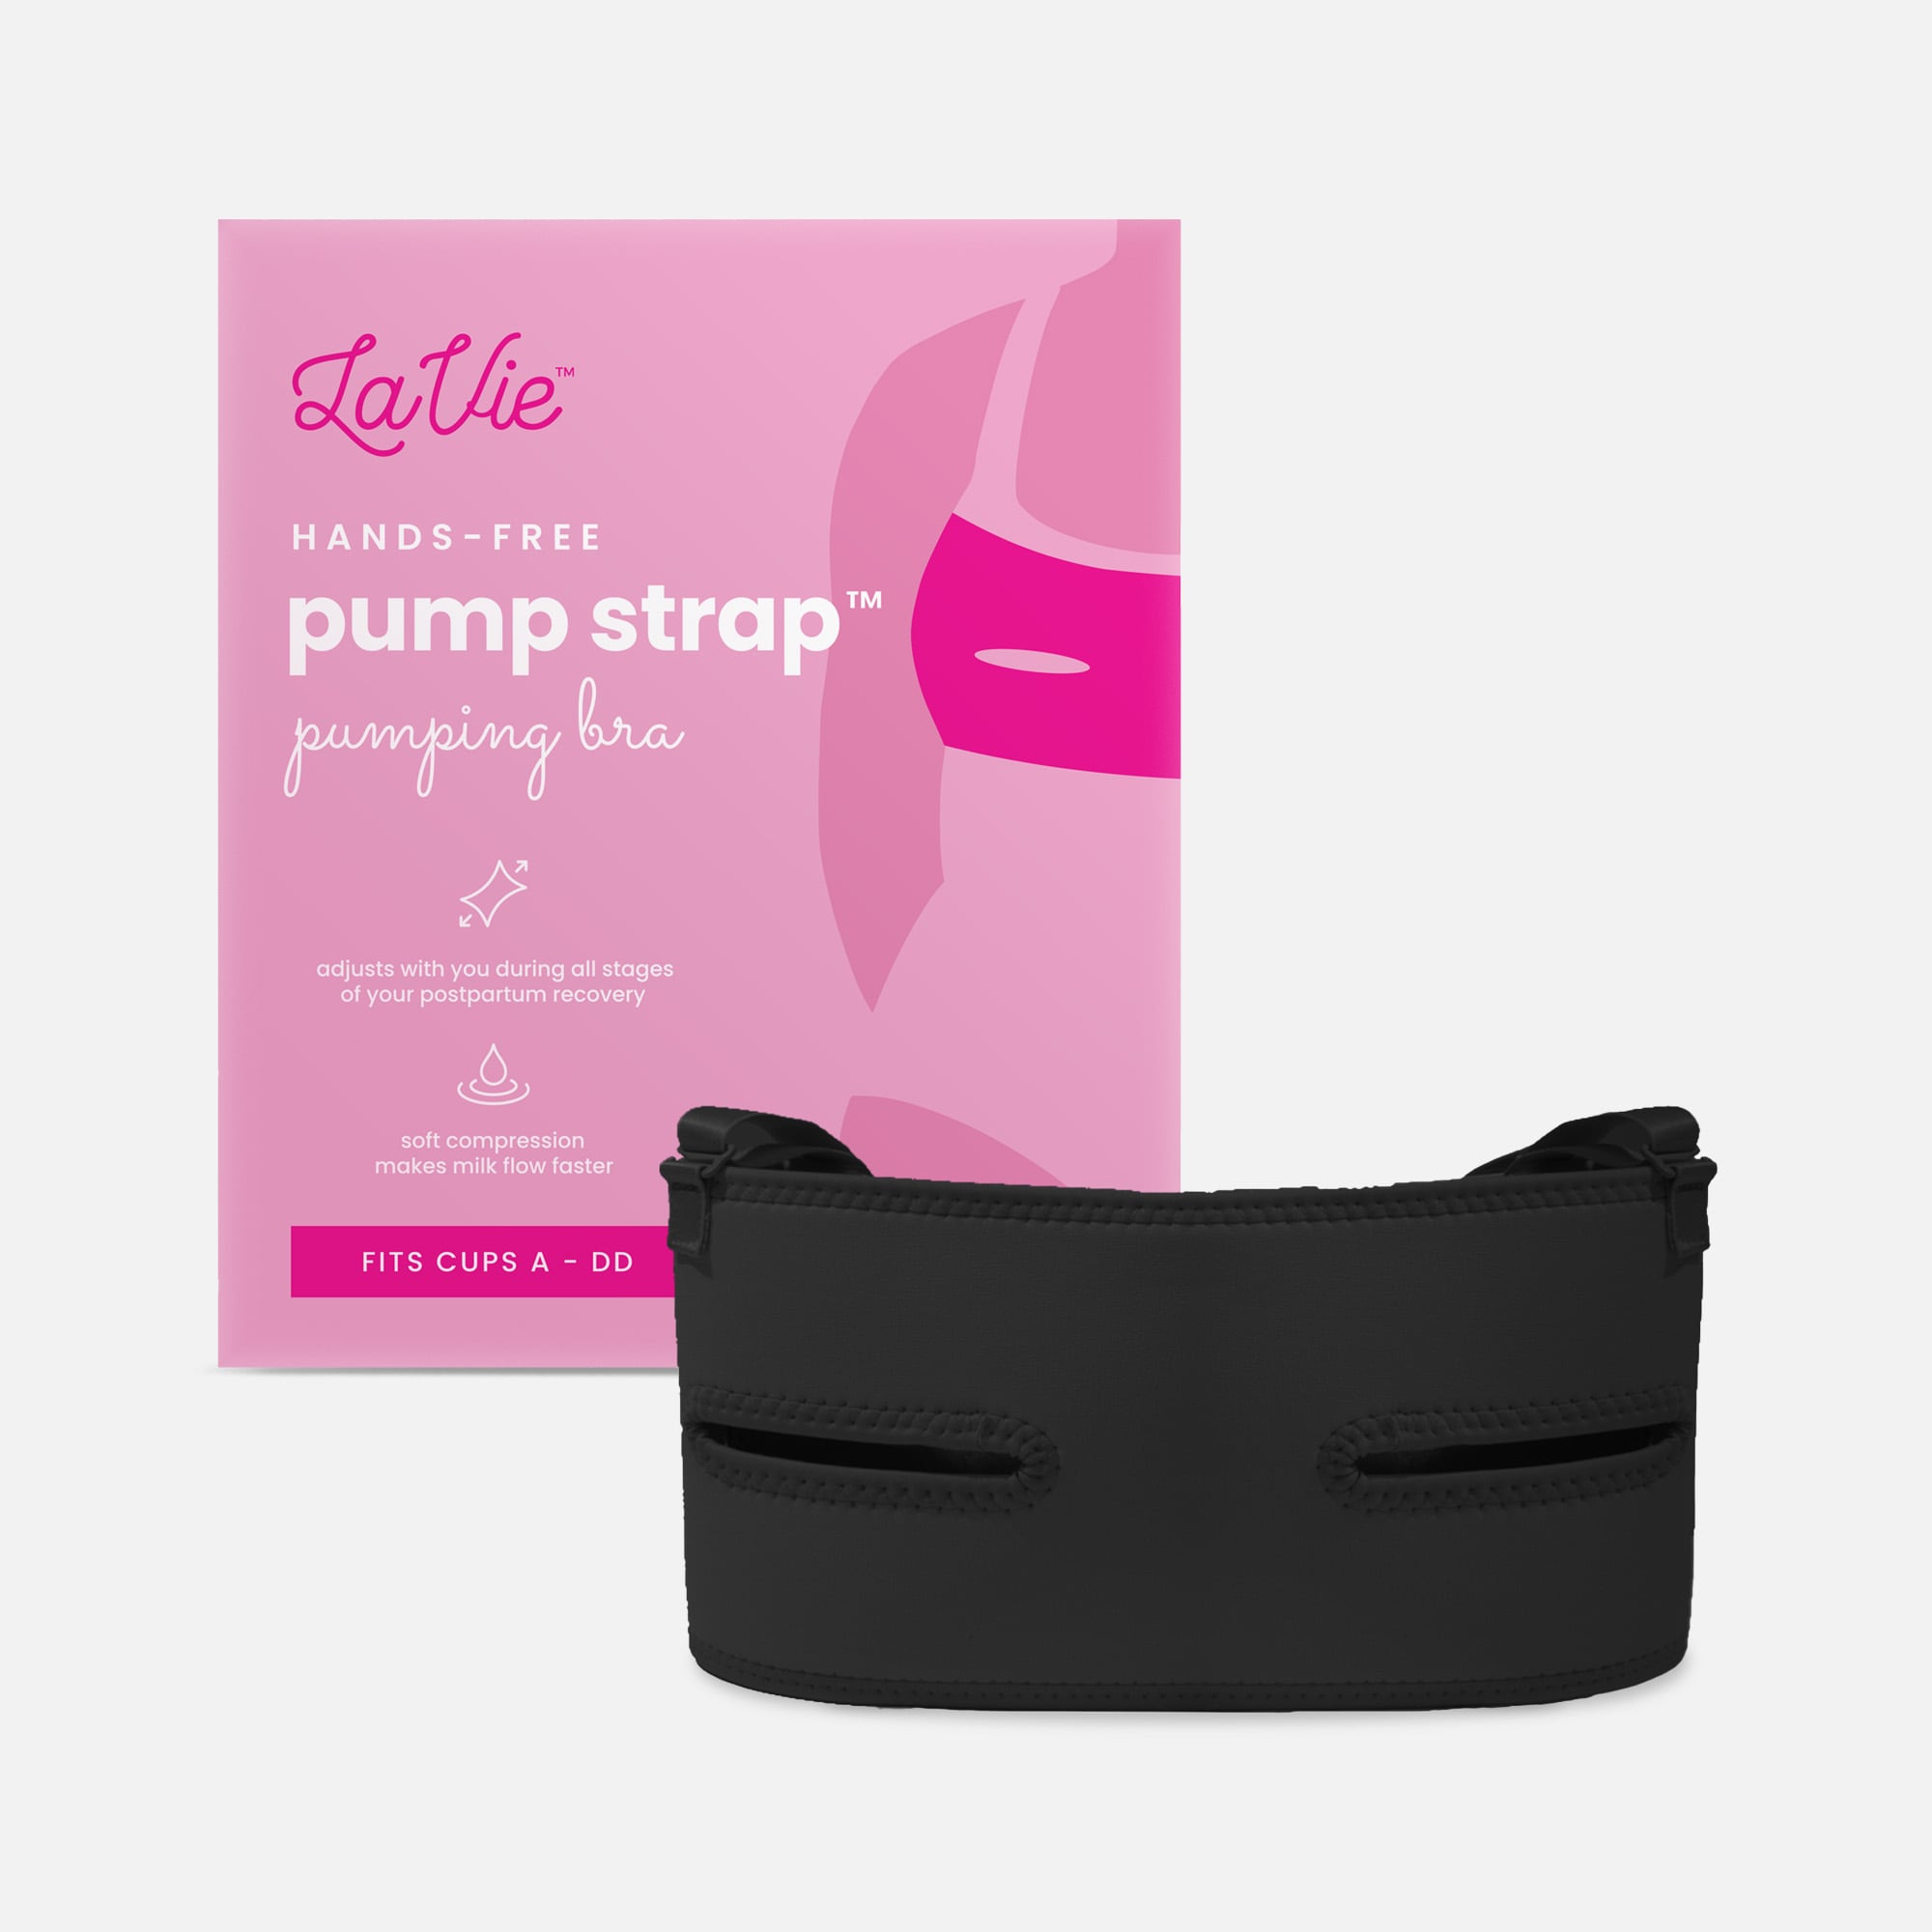 HSA Eligible  LaVie Pump Strap Hands-Free Pumping & Nursing Bra